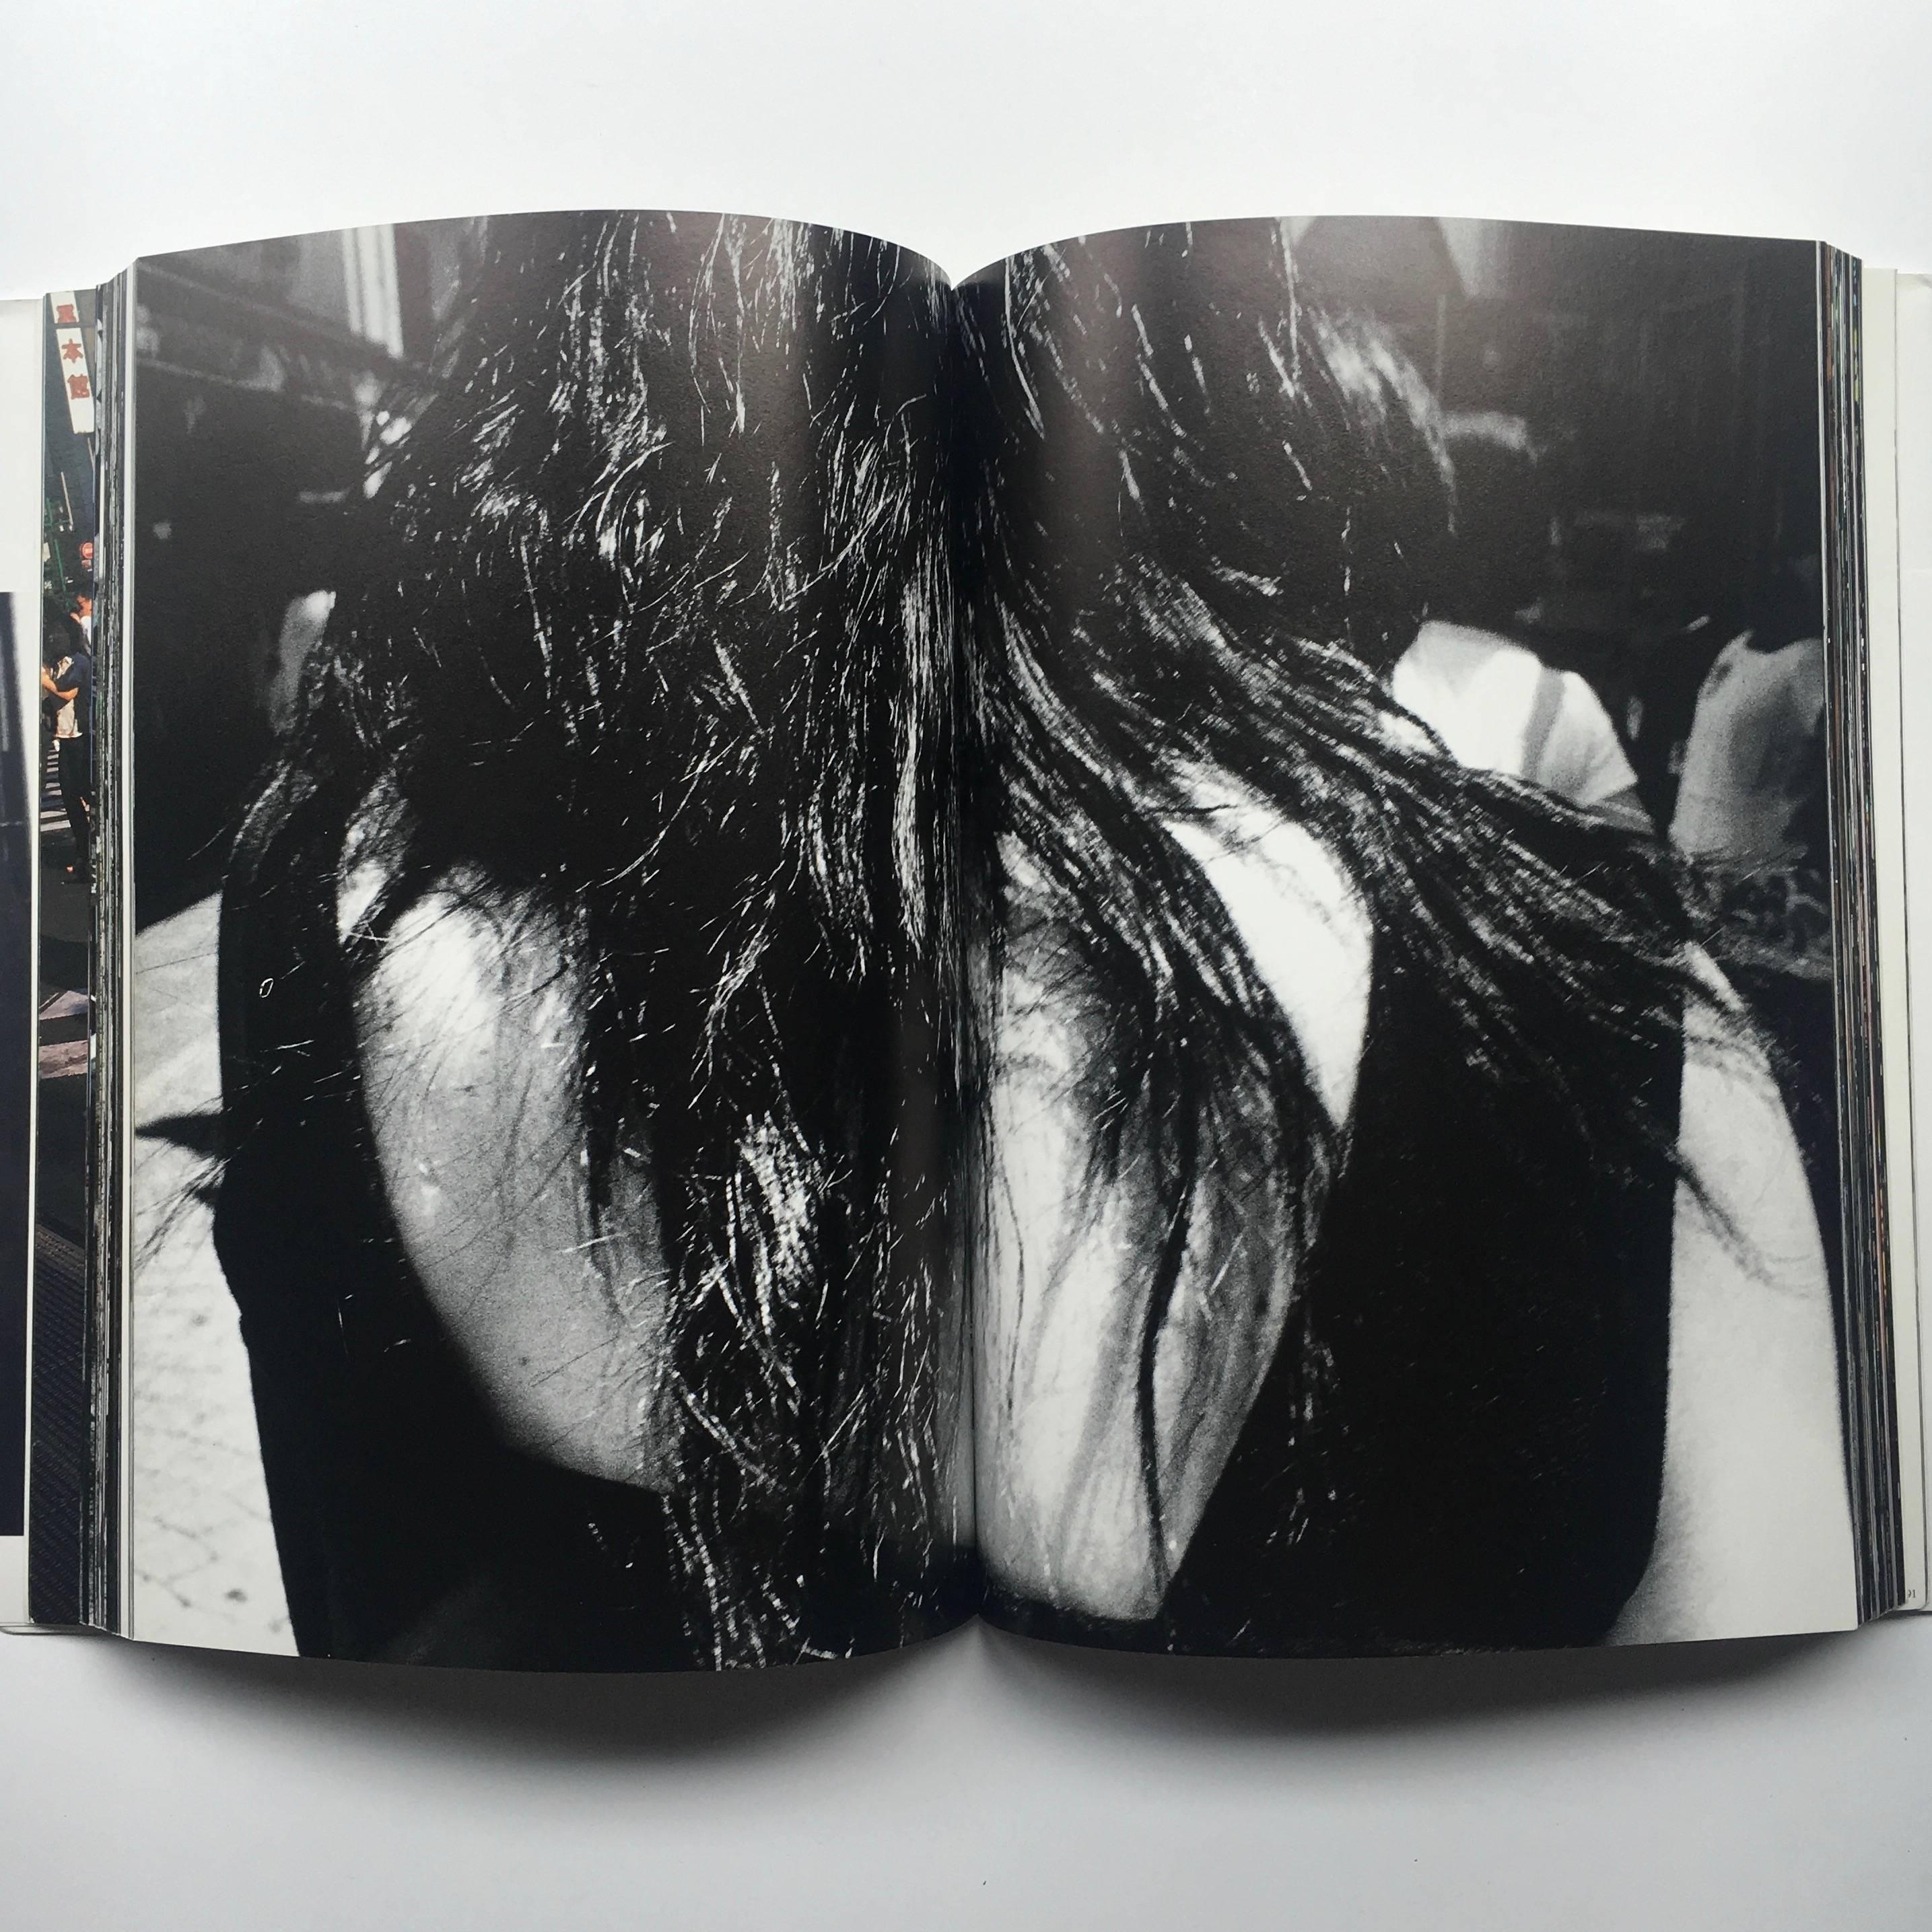 Japanese Moriyama, Shinjuku, Araki - Daido Moriyama, Nobuyoshi Araki - 1st Edition, 2005 For Sale